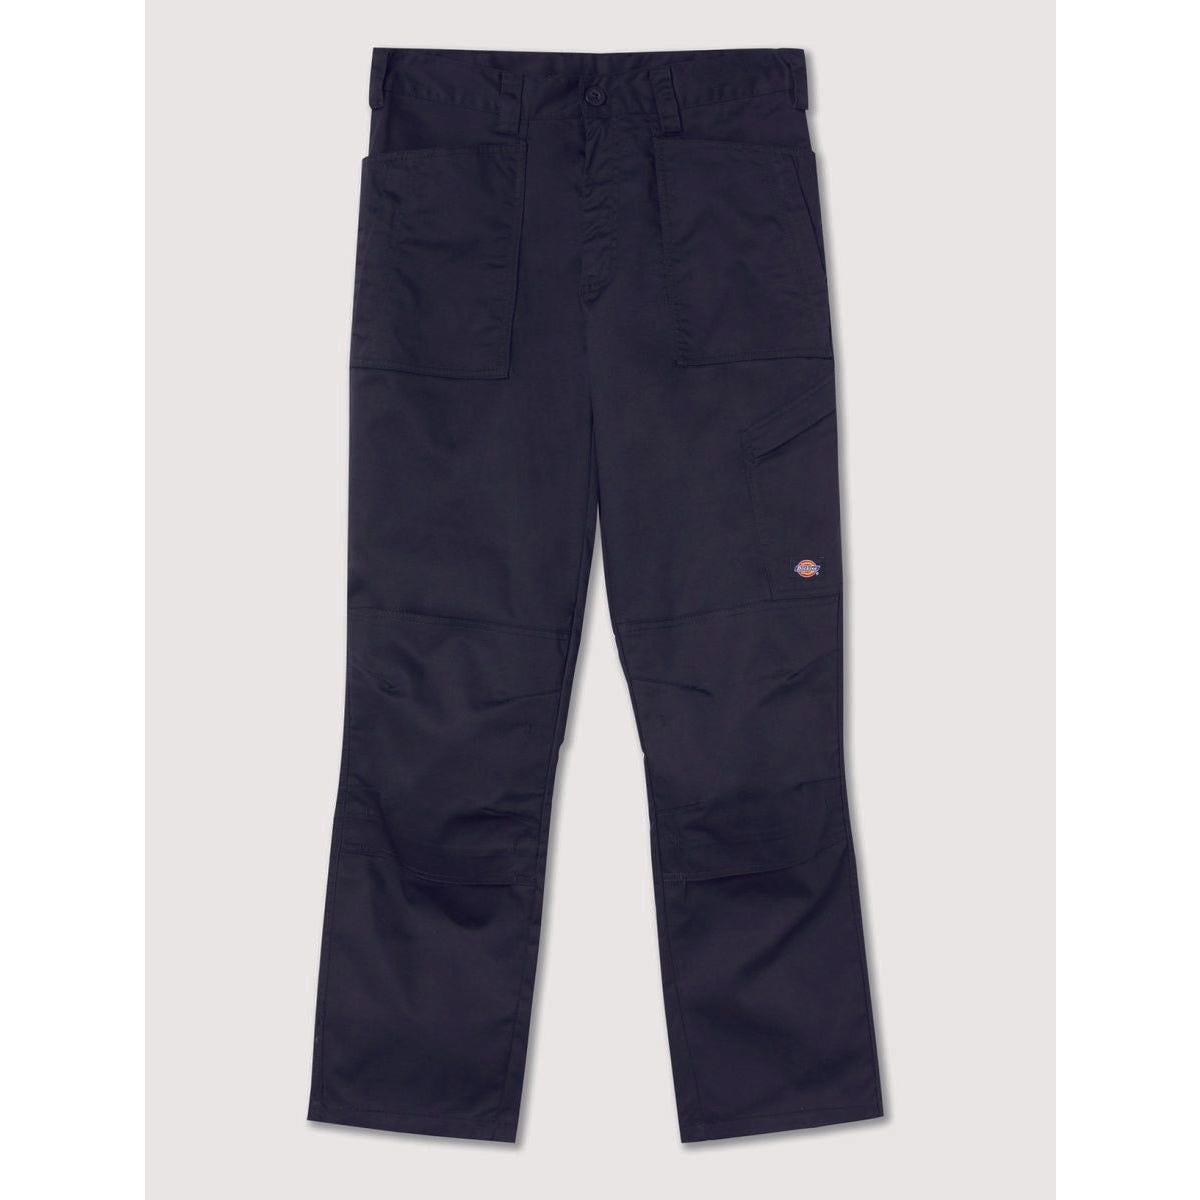 Pantalon de travail Action Flex bleu marine - Dickies - Taille 46 7